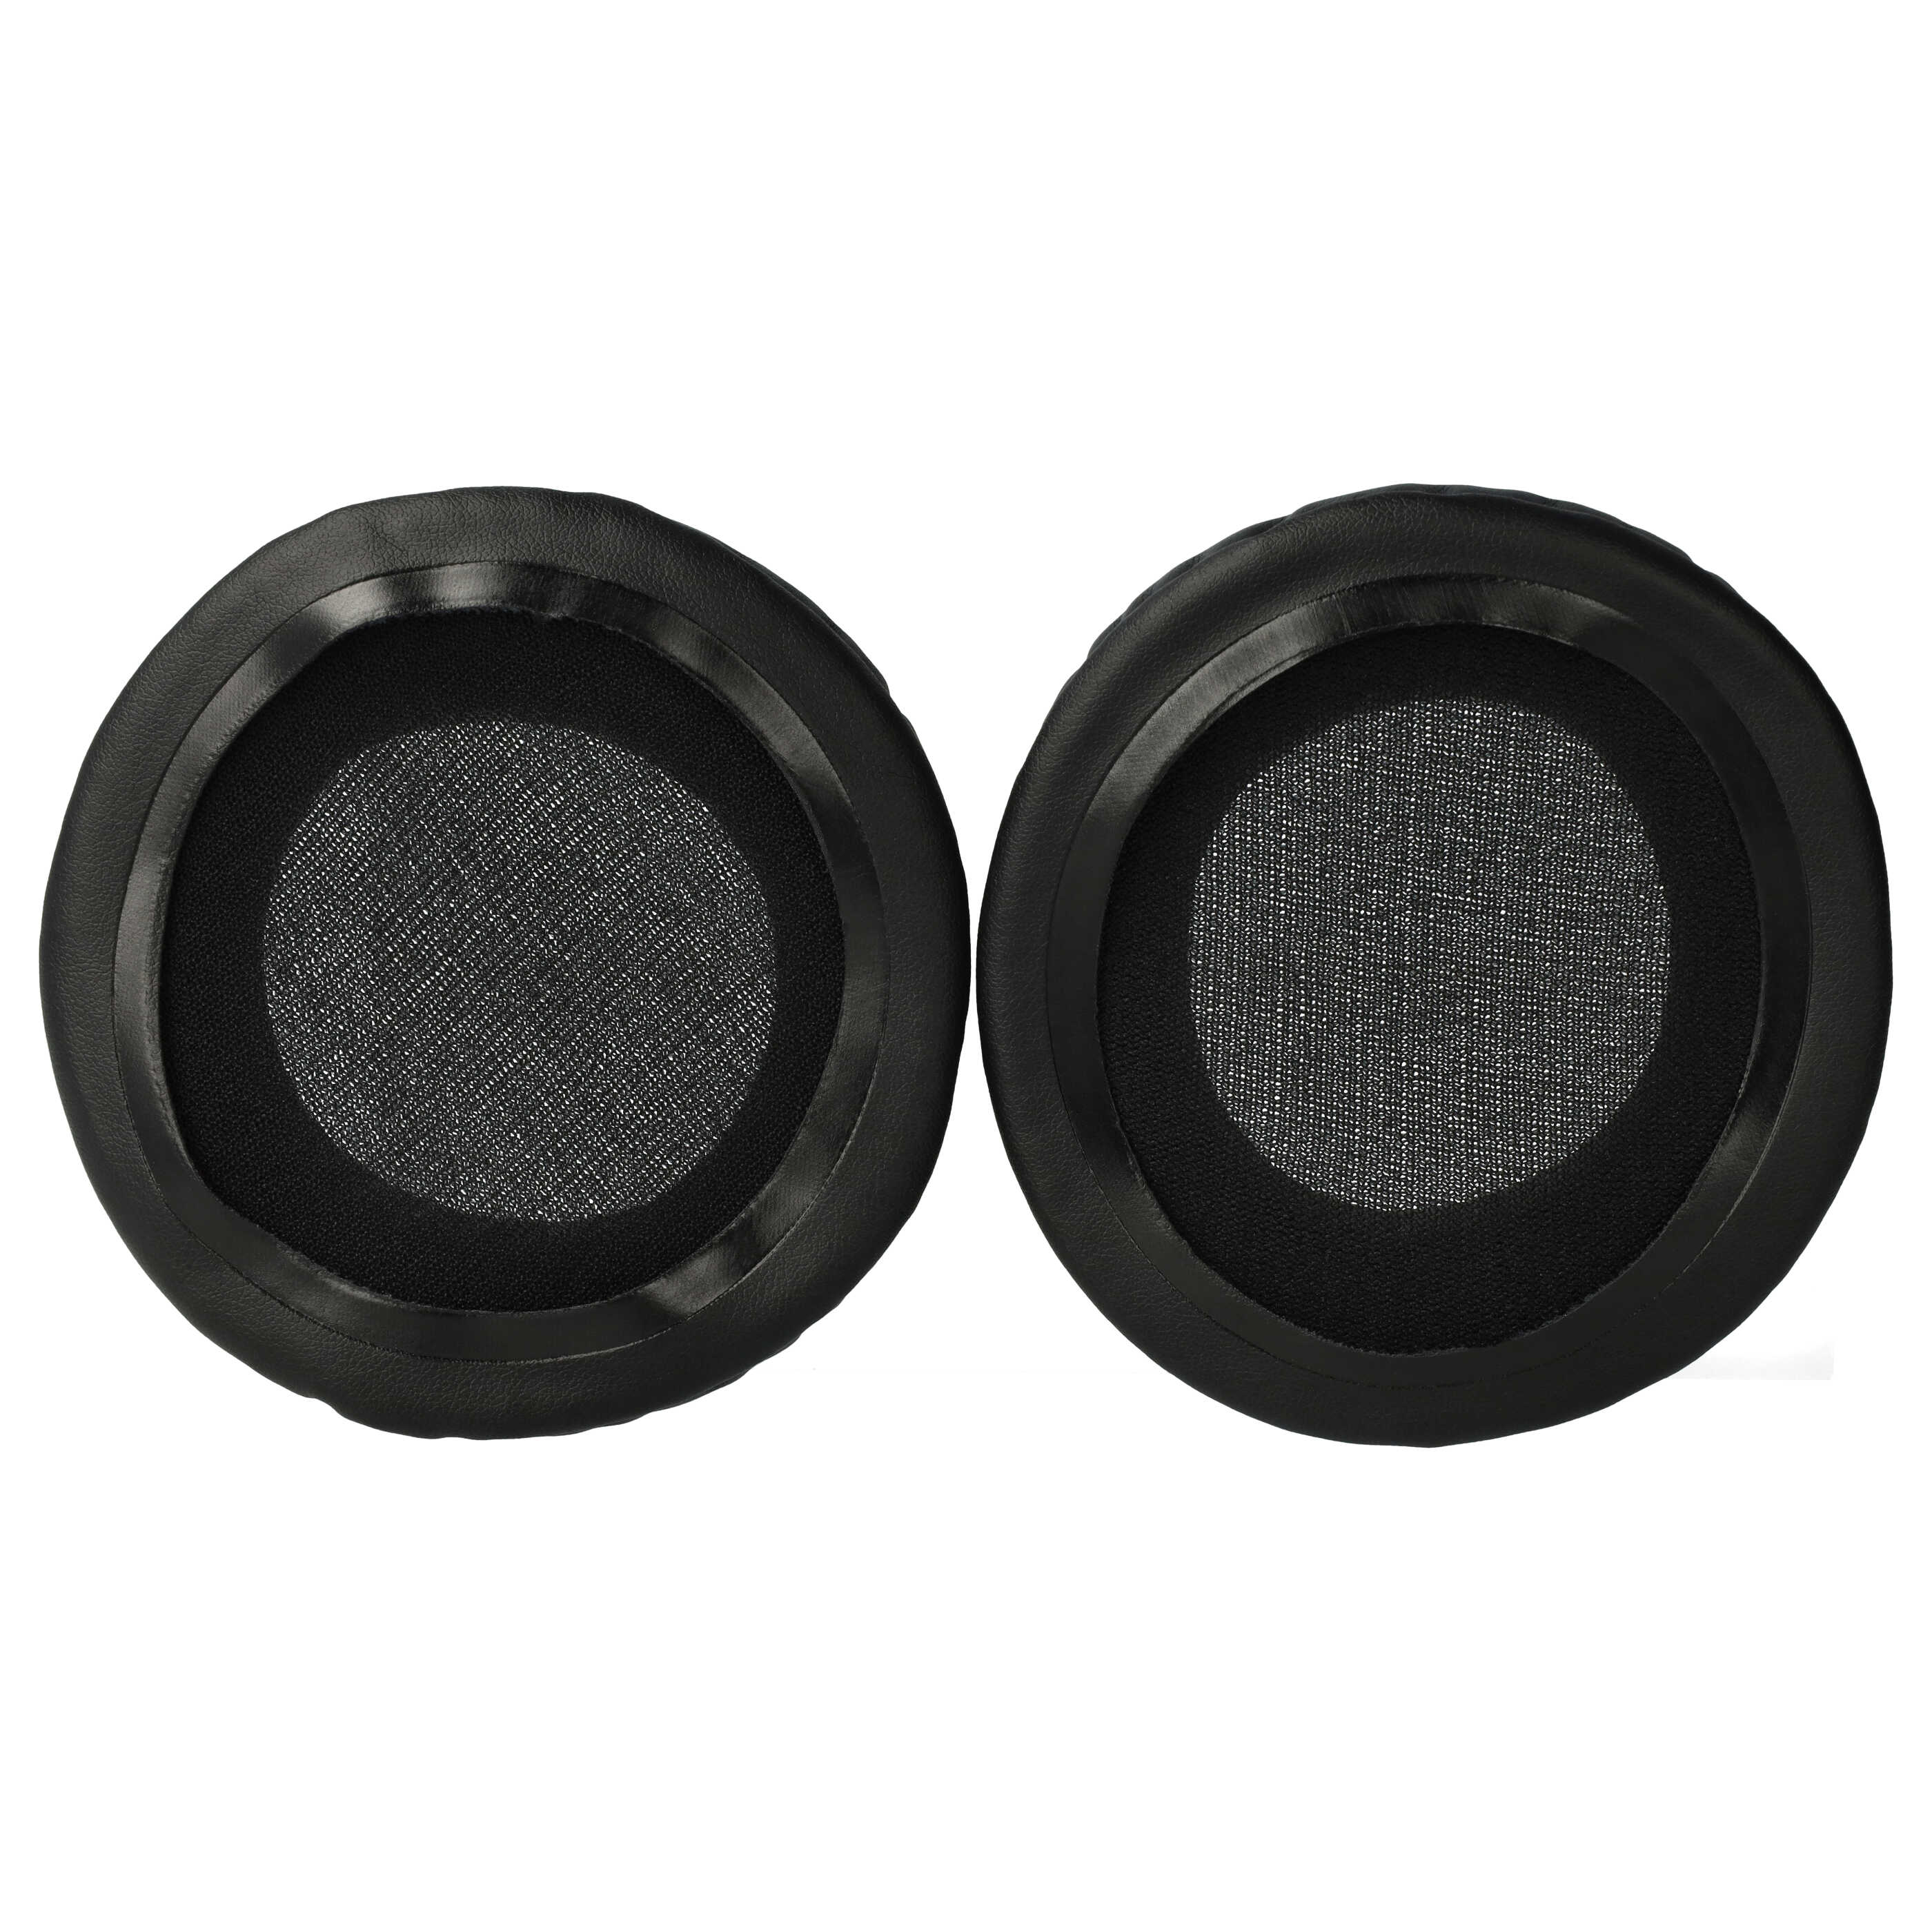 2x Ear Pads suitable for Technics RP-DH1200 Headphones etc. - with Memory Foam, polyurethane / foam, 17 mm thi